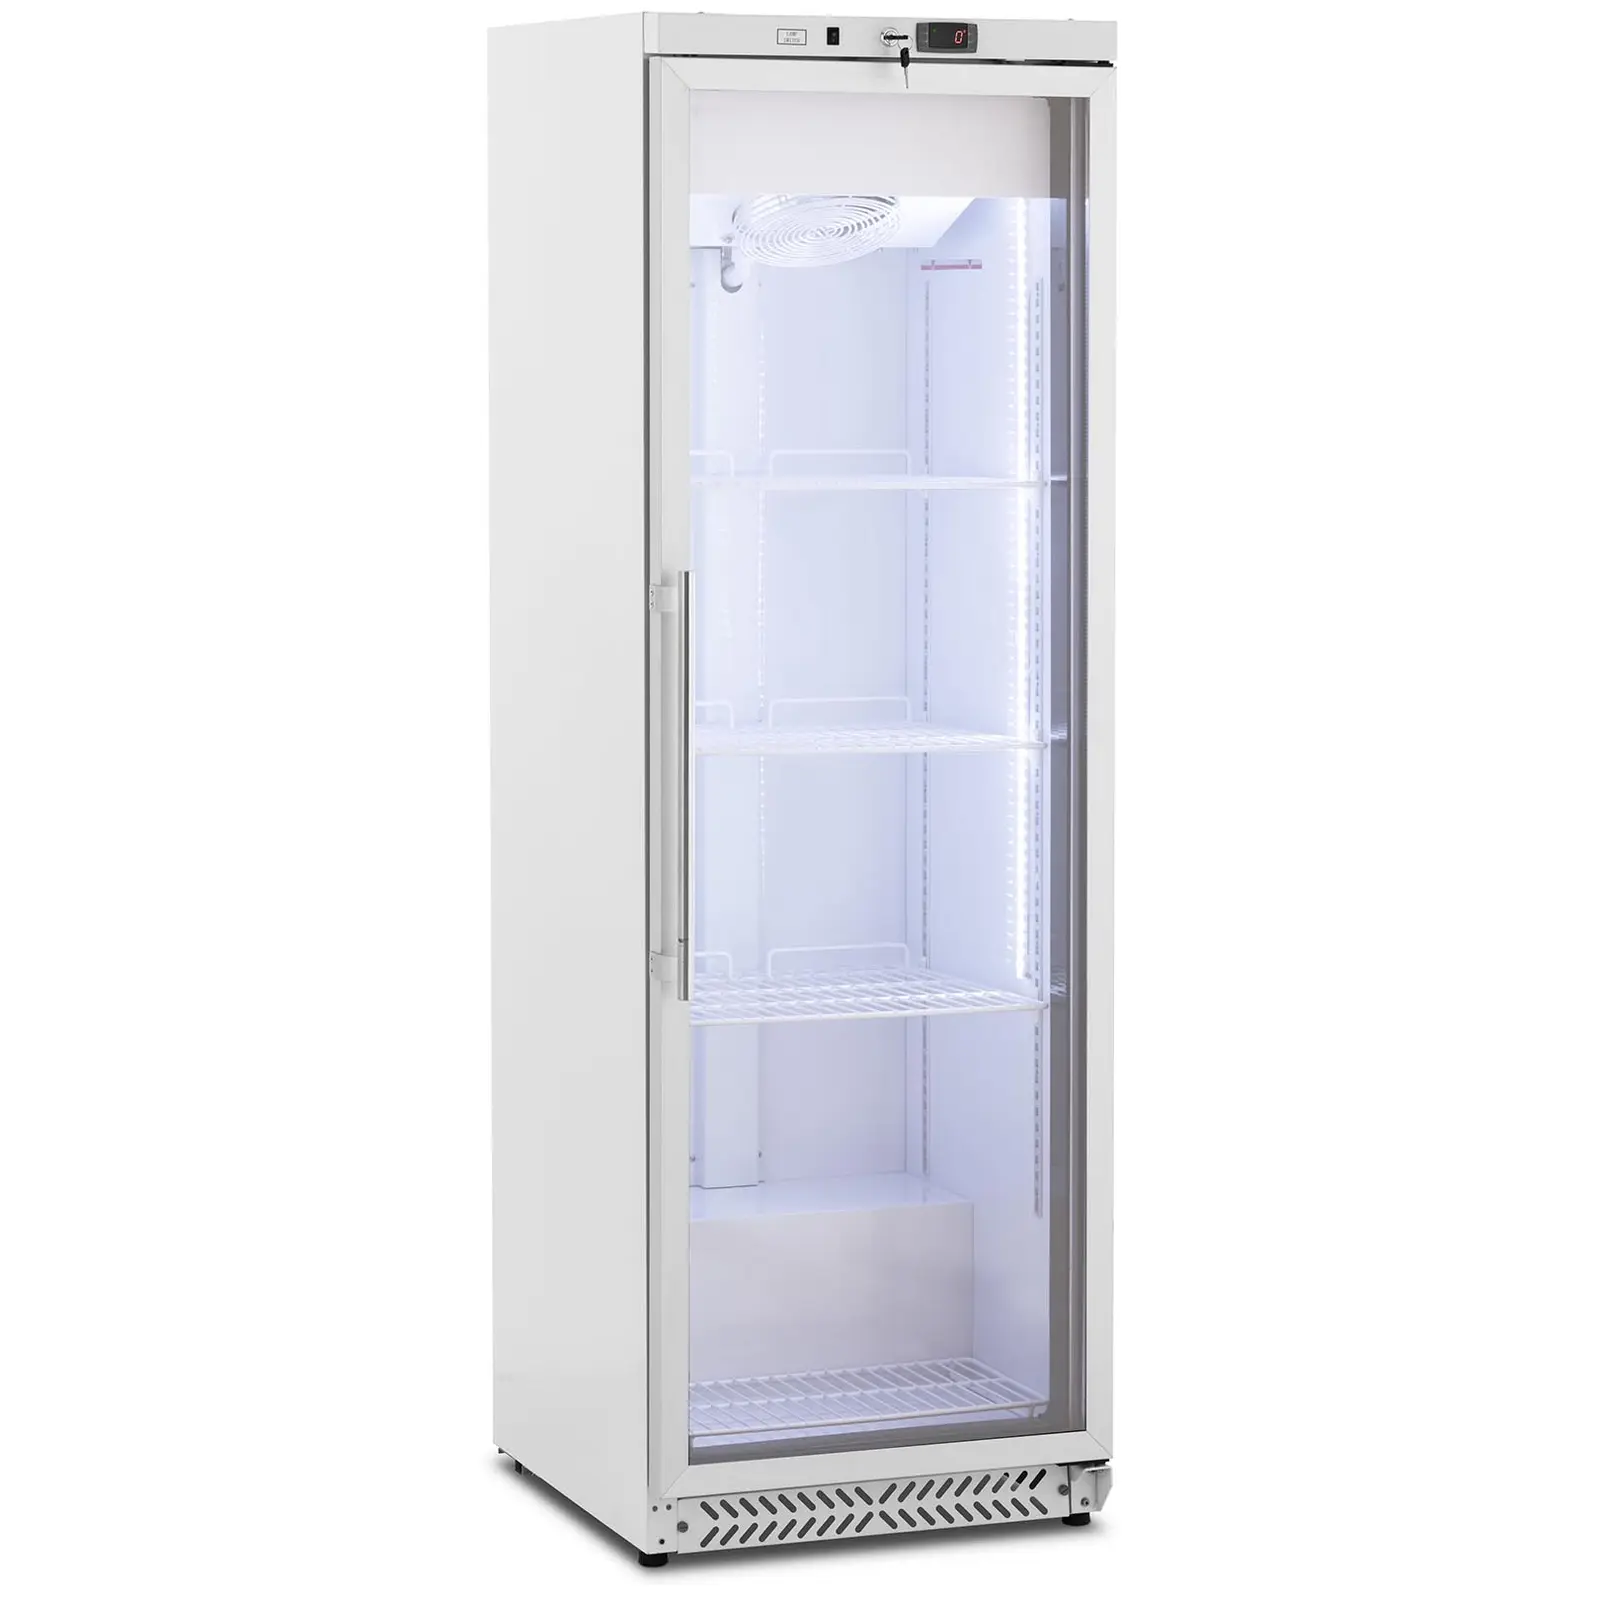 Gastro-Kühlschrank – 380 L – Royal Catering – mit Glastür RCLK-C380GB